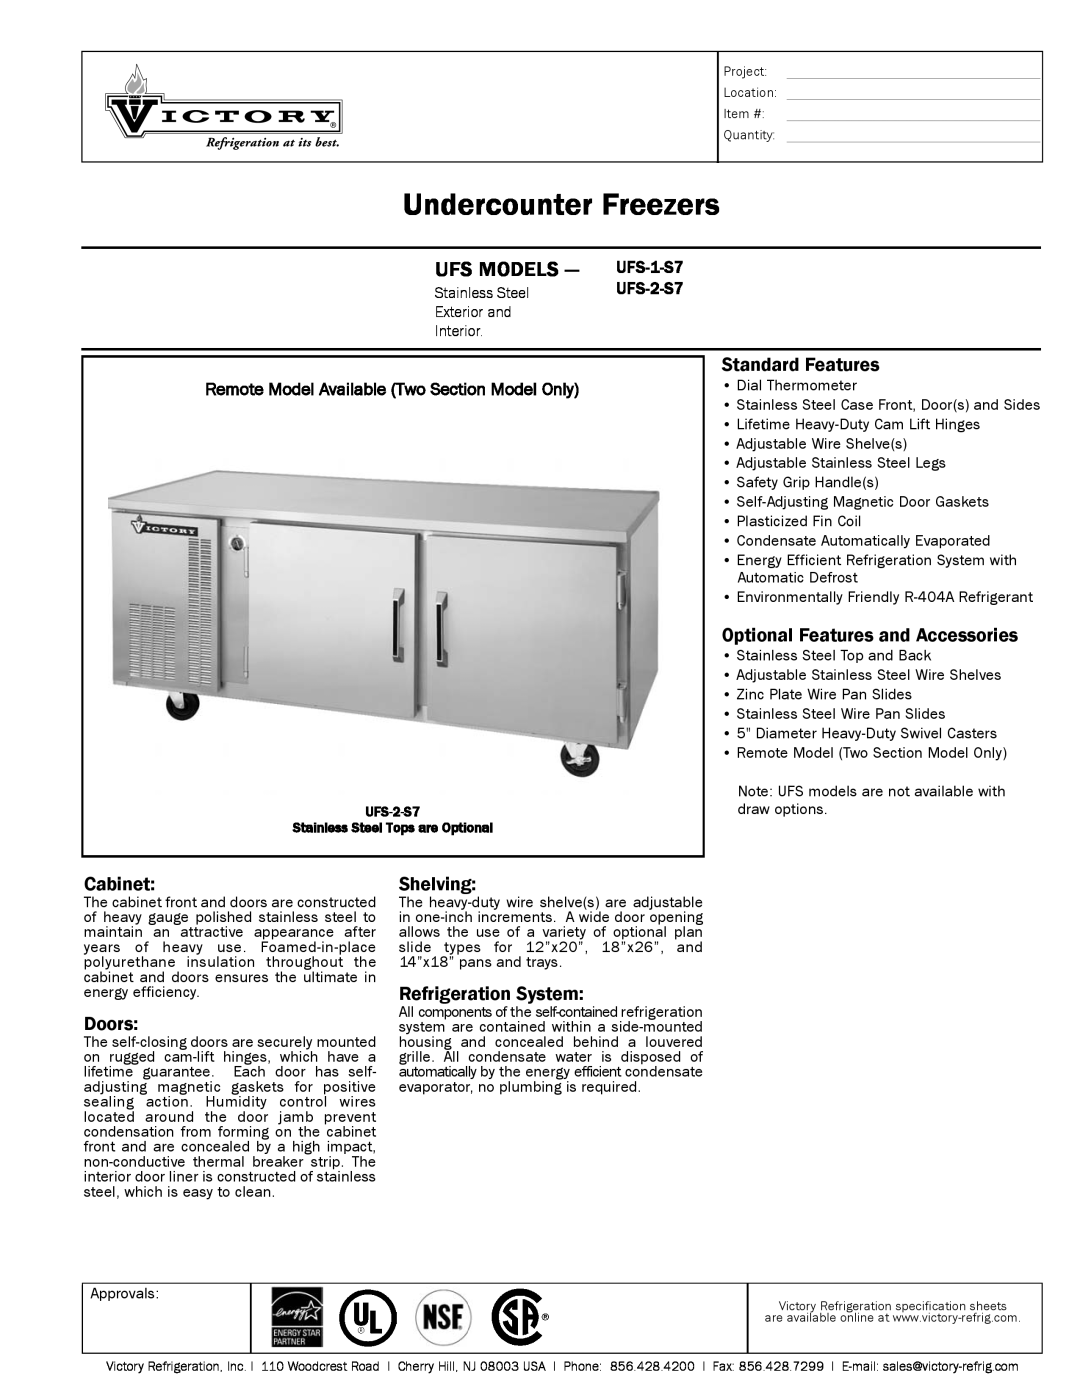 Victory Refrigeration UFS-2-S7 specifications Undercounter Freezers, UFS MODELS - UFS-1-S7, Standard Features, Cabinet 